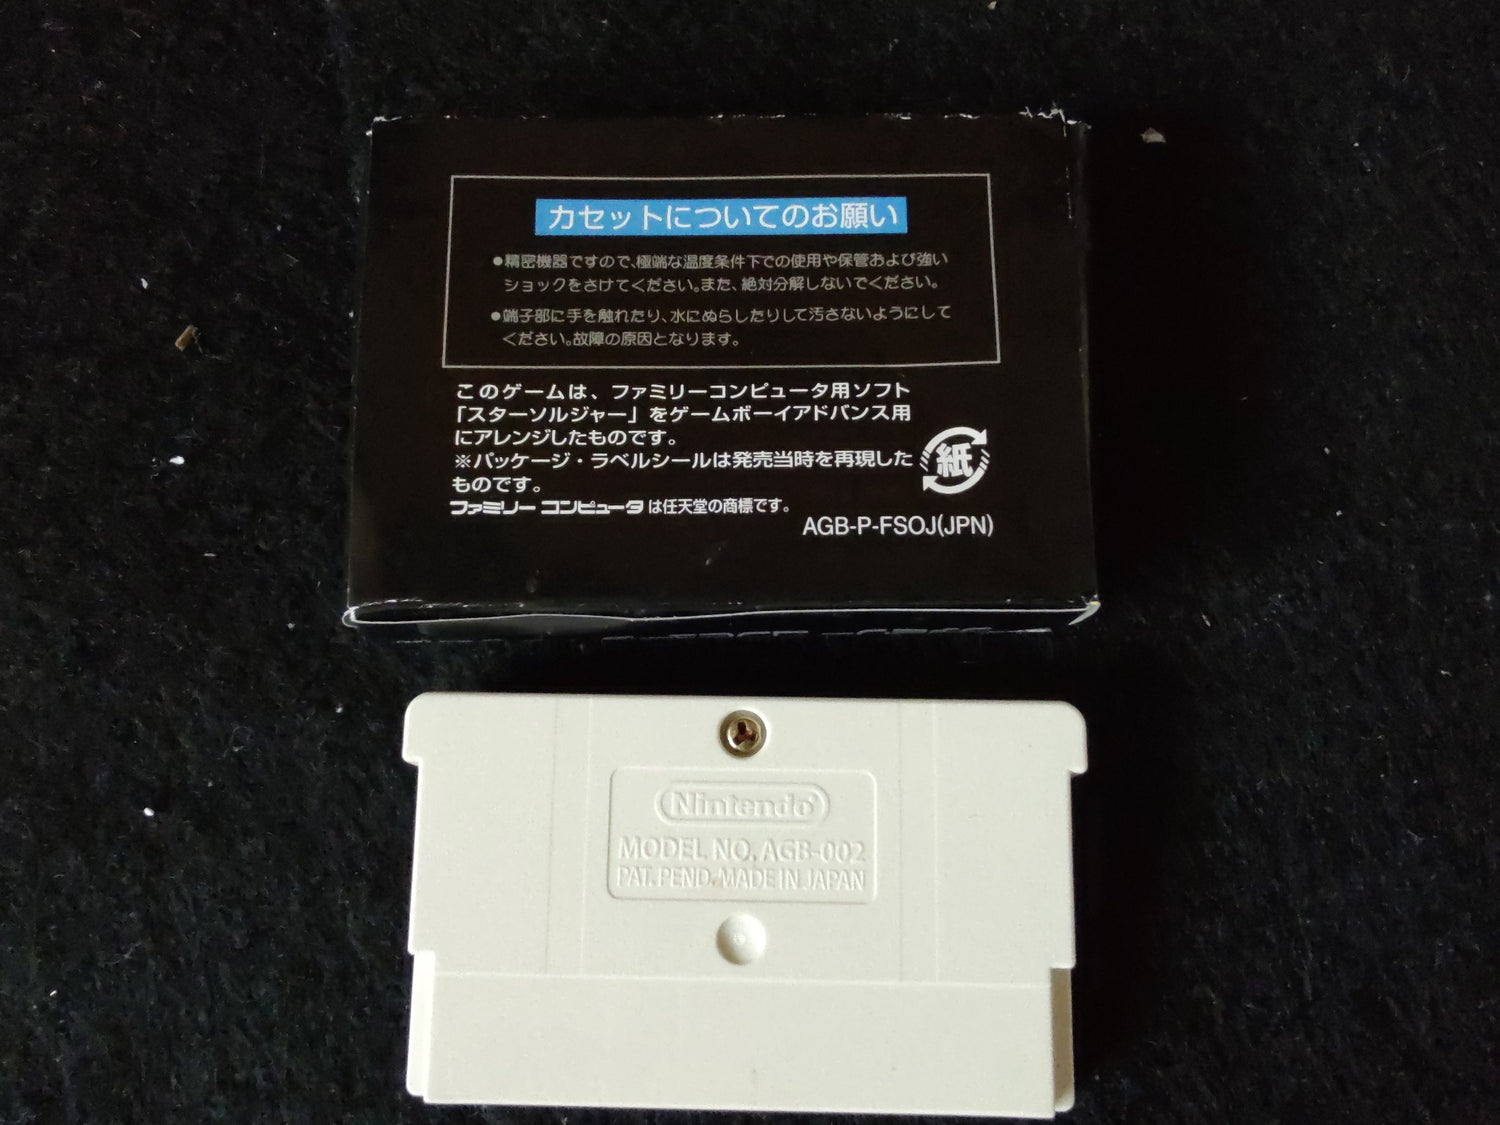 STAR SOLDIER, Donkey Kong, PAC MAN Famicom Mini Ver. Gameboy 